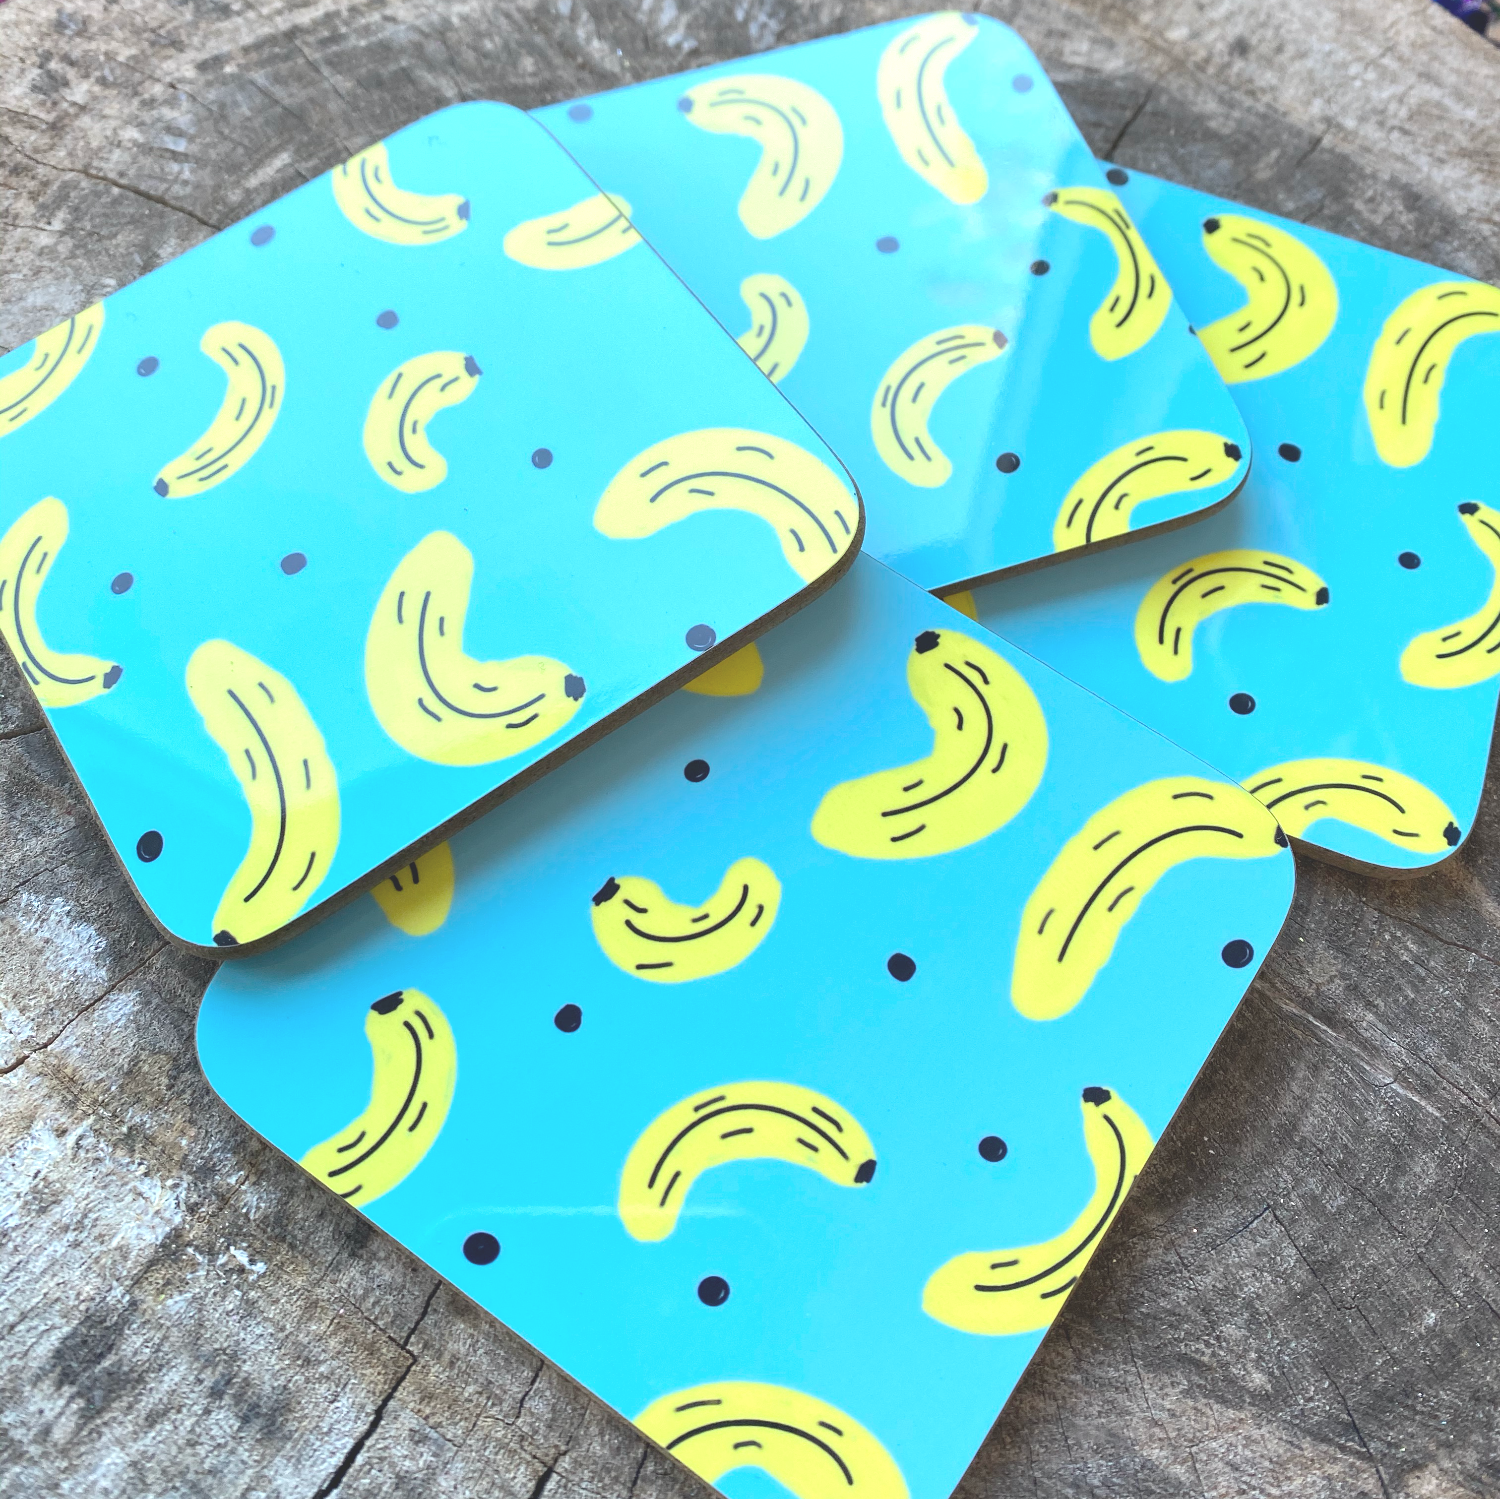 Banana Pattern Coaster - The Argentum Design Co